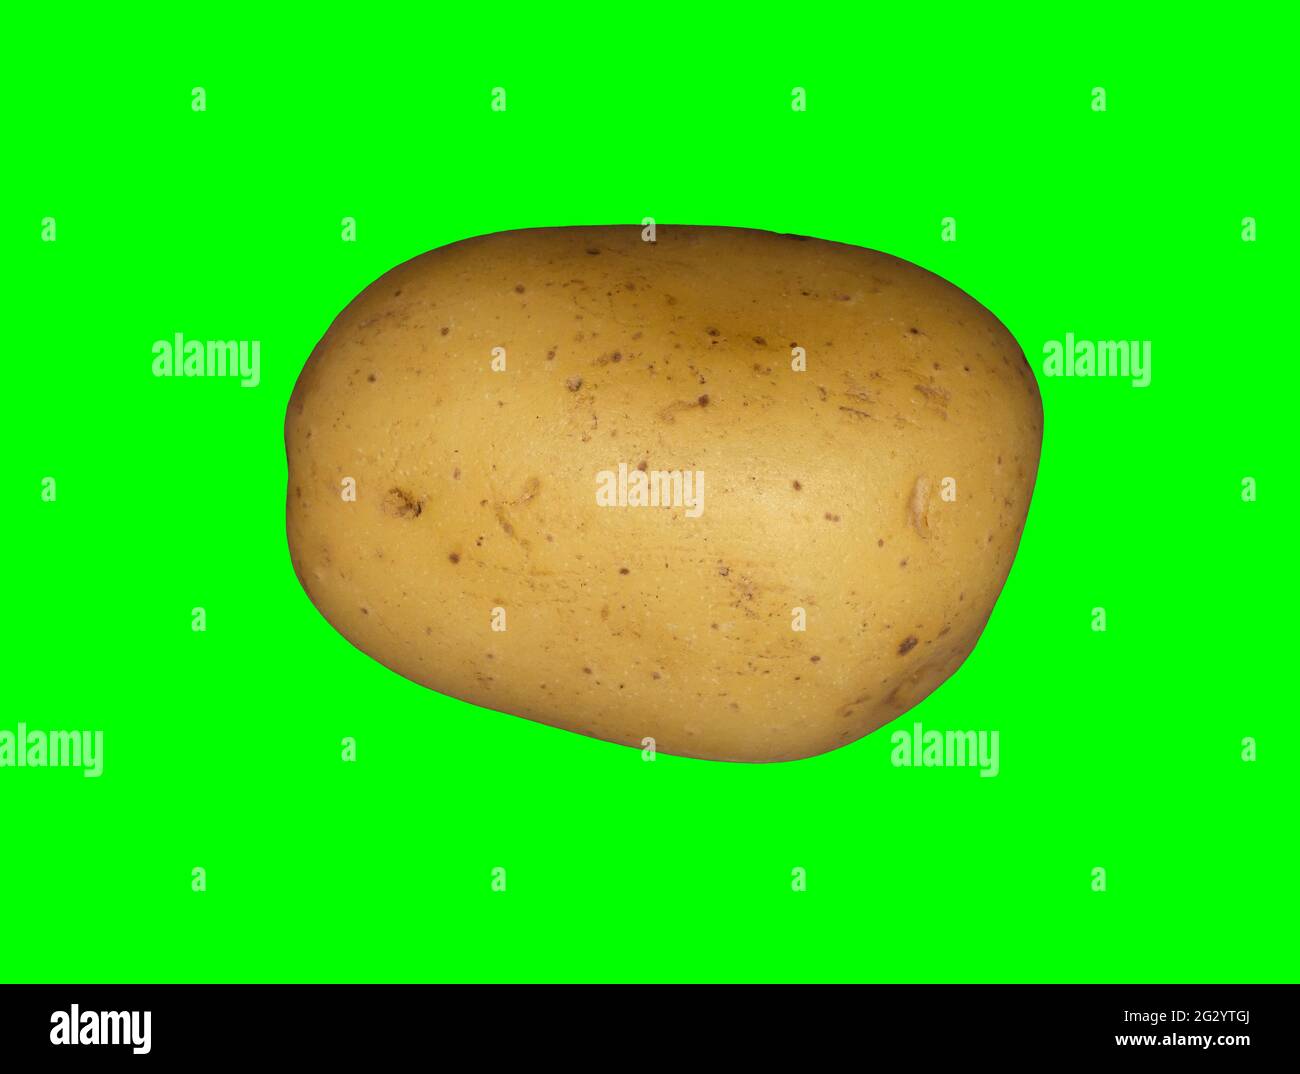 A white potato on a plain green background ready for easy keying Stock Photo